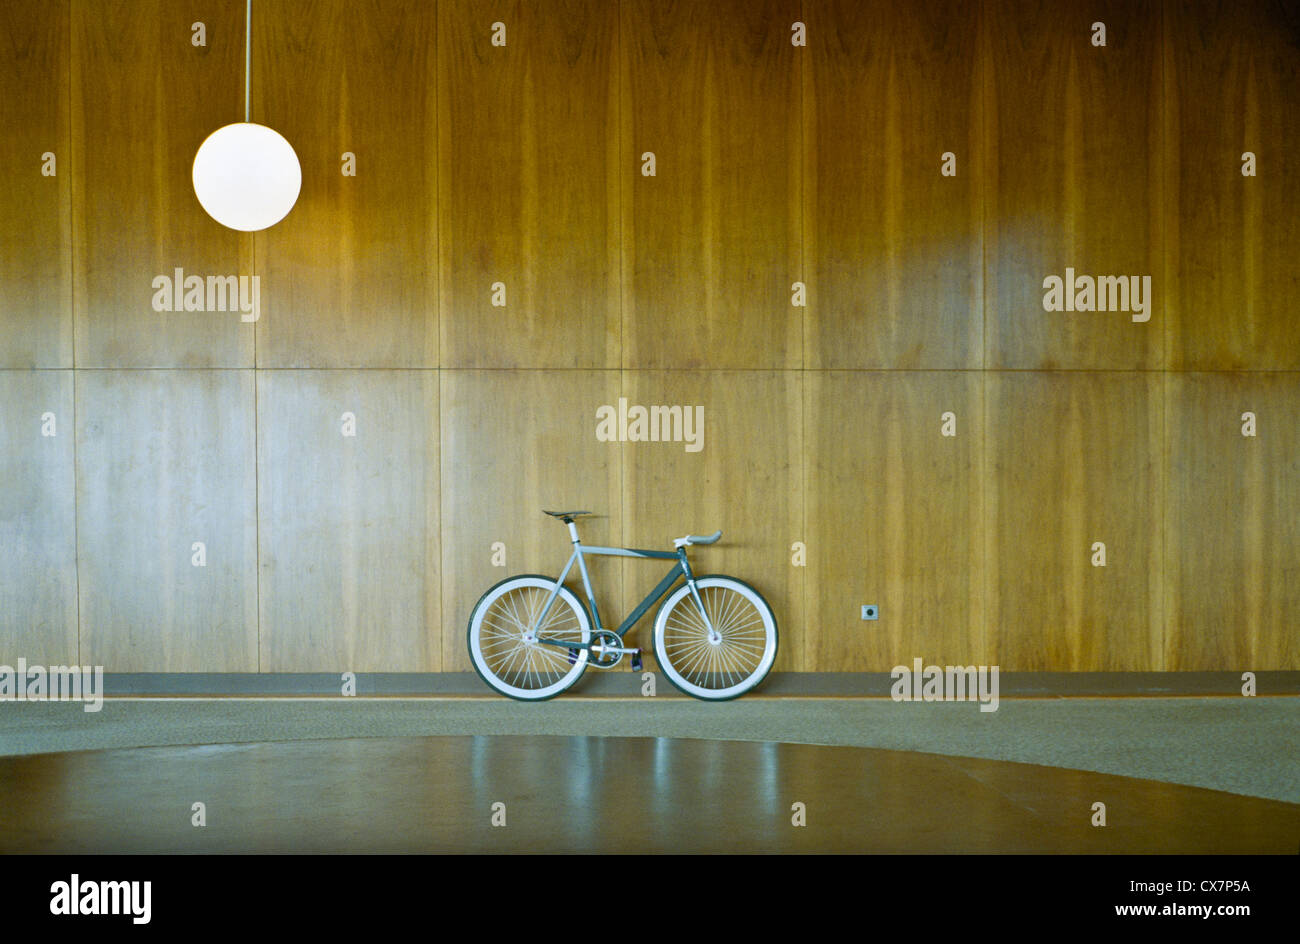 Bike parked against wood paneling Stock Photo